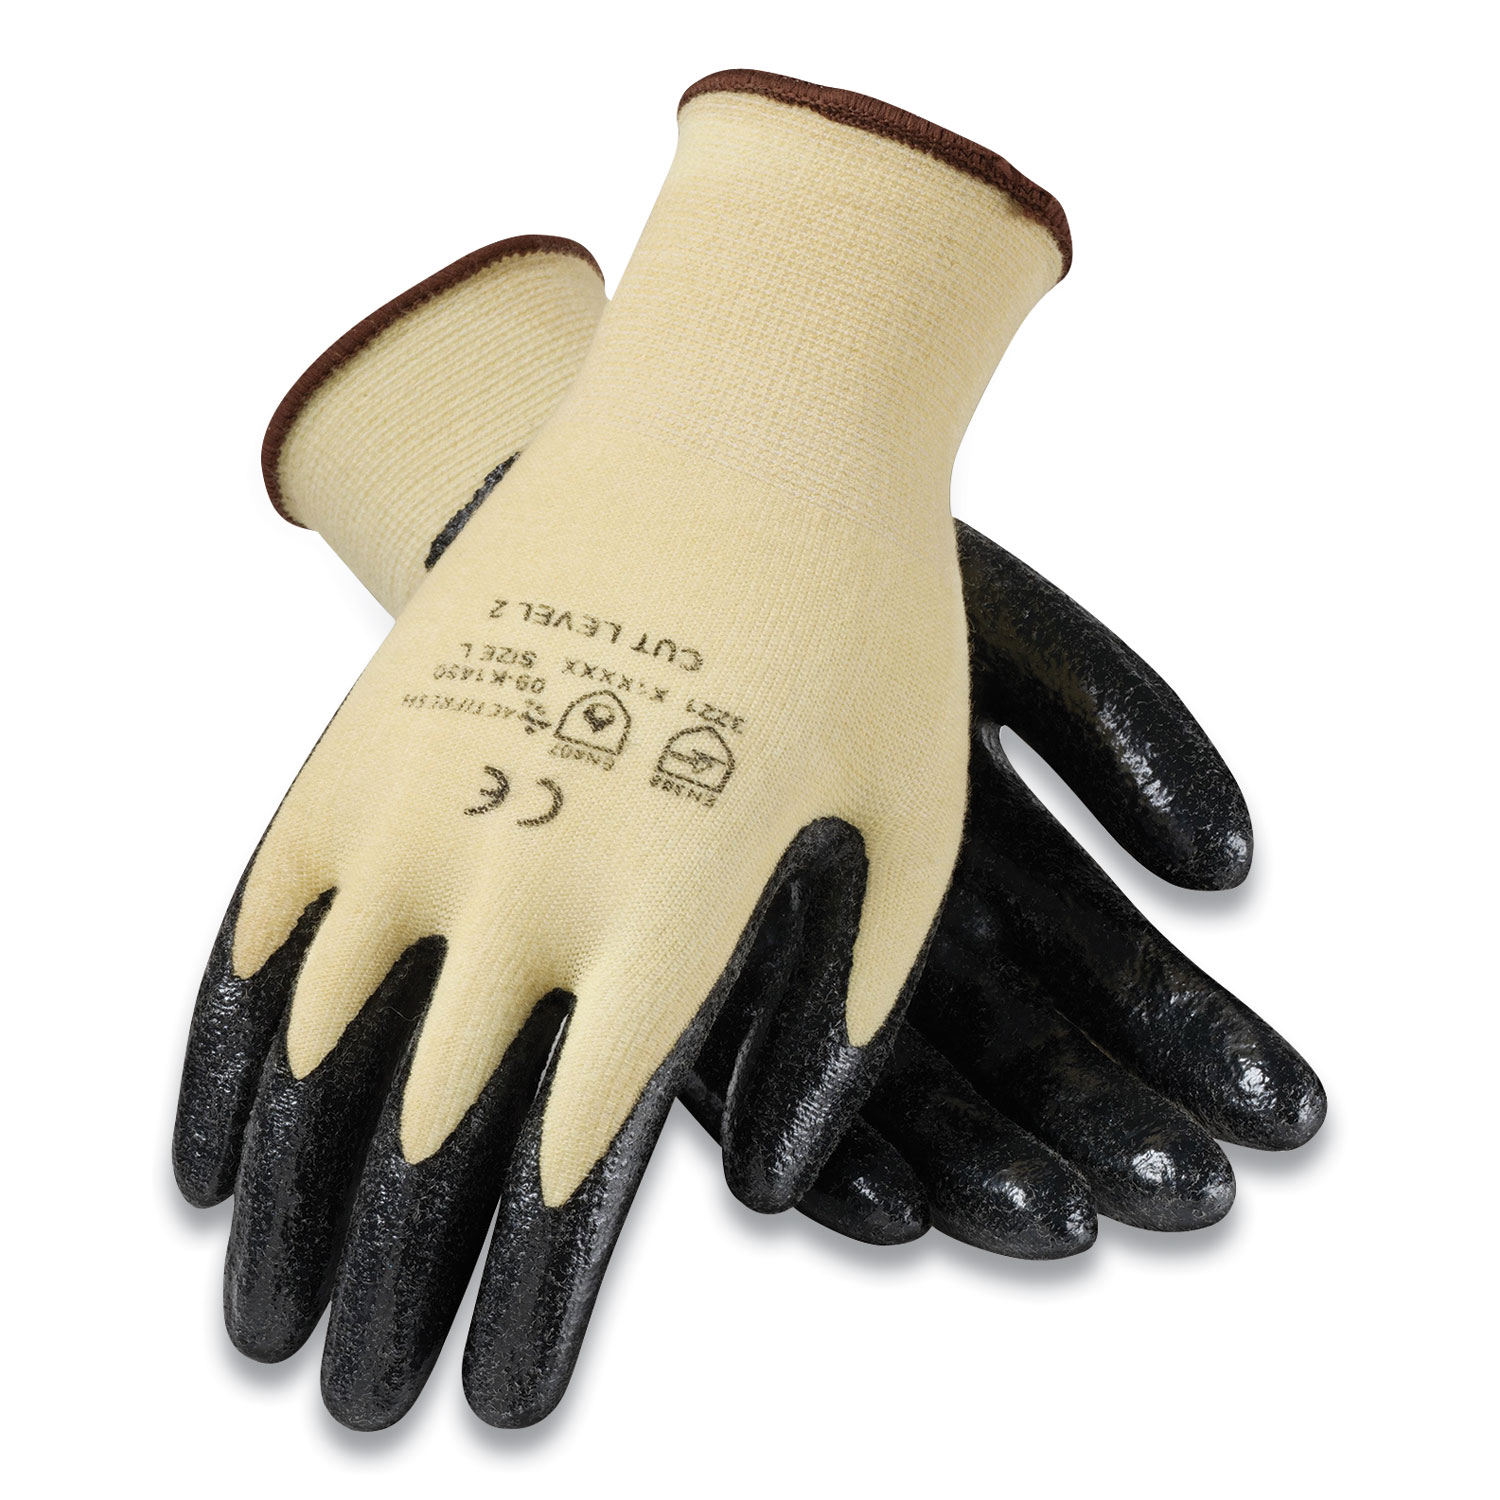 KEV Seamless Knit Kevlar Gloves, Medium, Yellow/Black, 12 Pairs